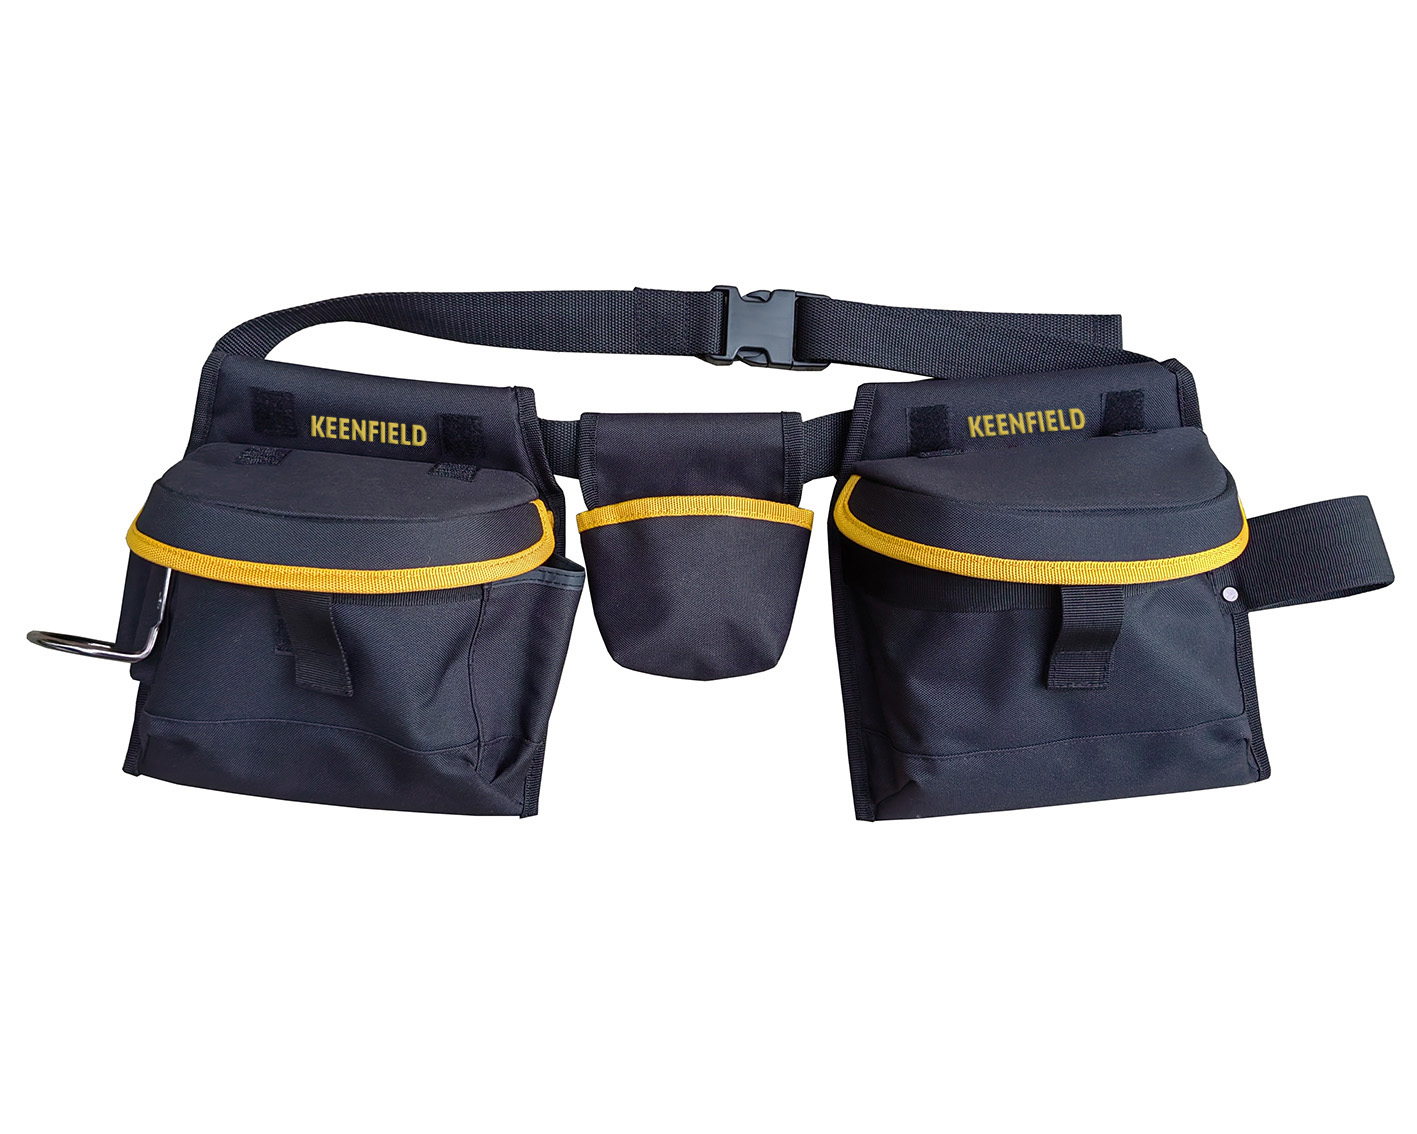 Durable adjustable waist tool bag belt mullet buster 3 bag tool belt KFB-766